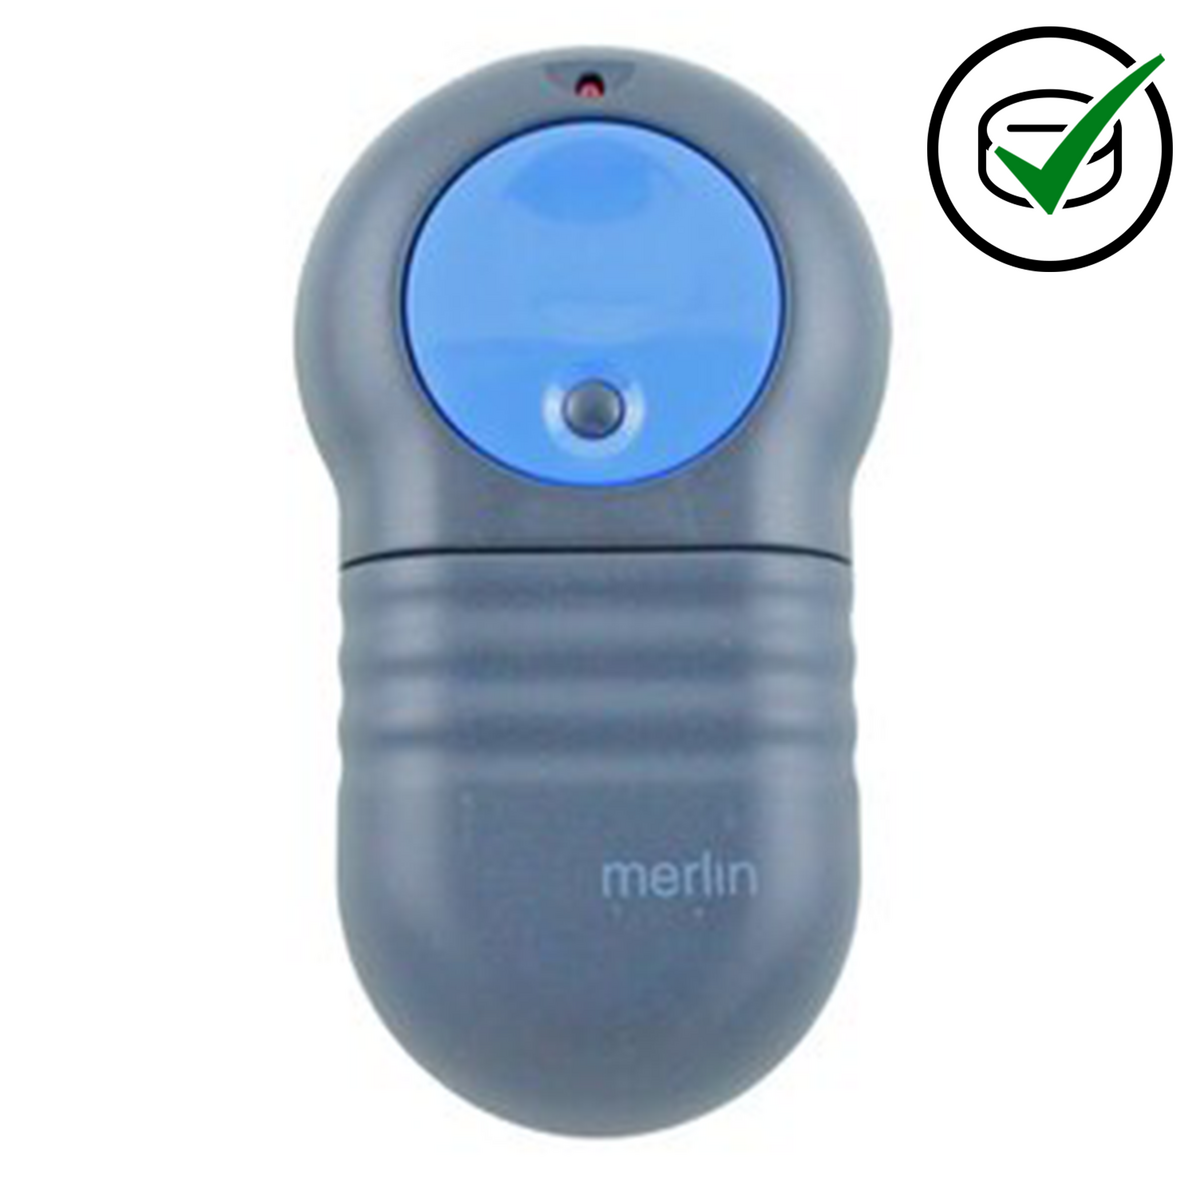 Merlin M802 Genuine Remote